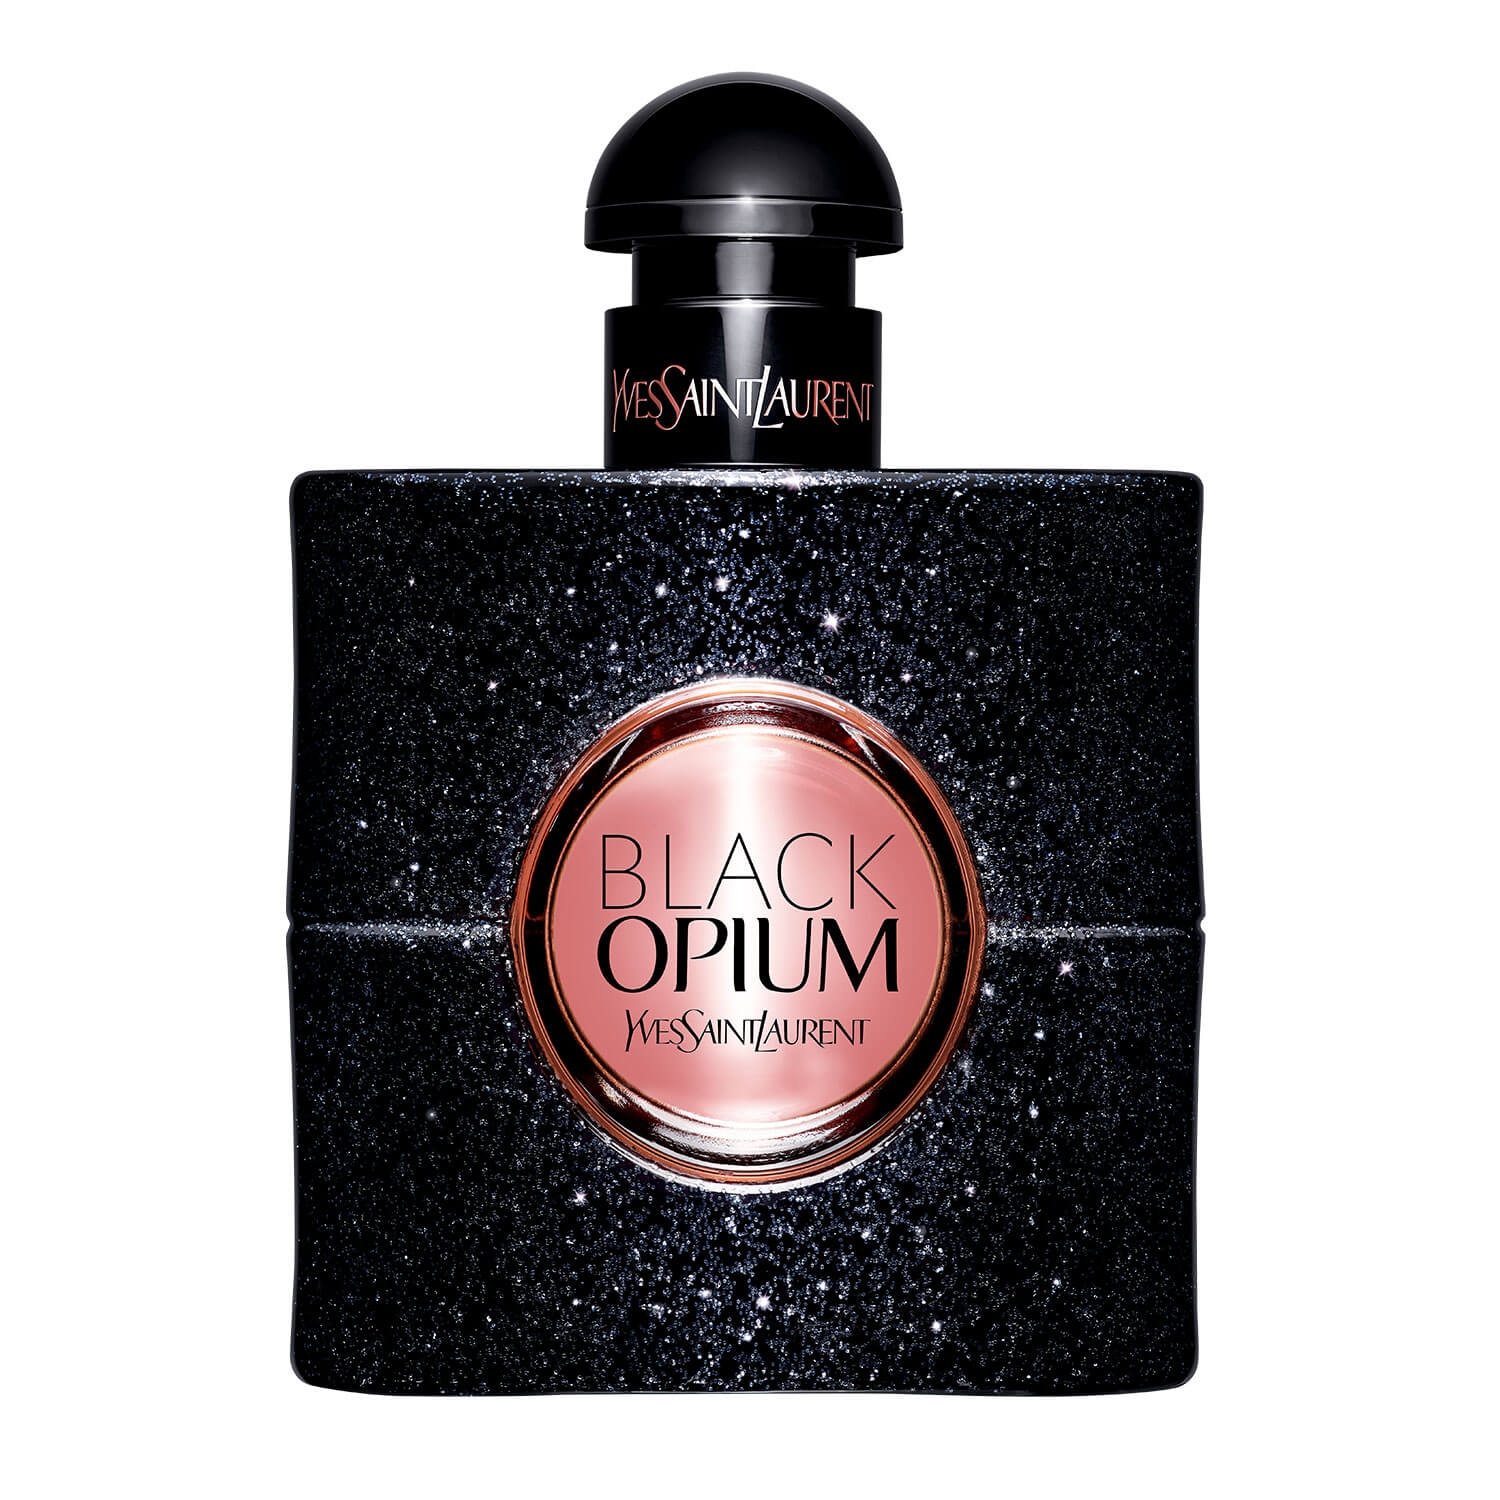 Produktbild von Black Opium - Eau de Parfum